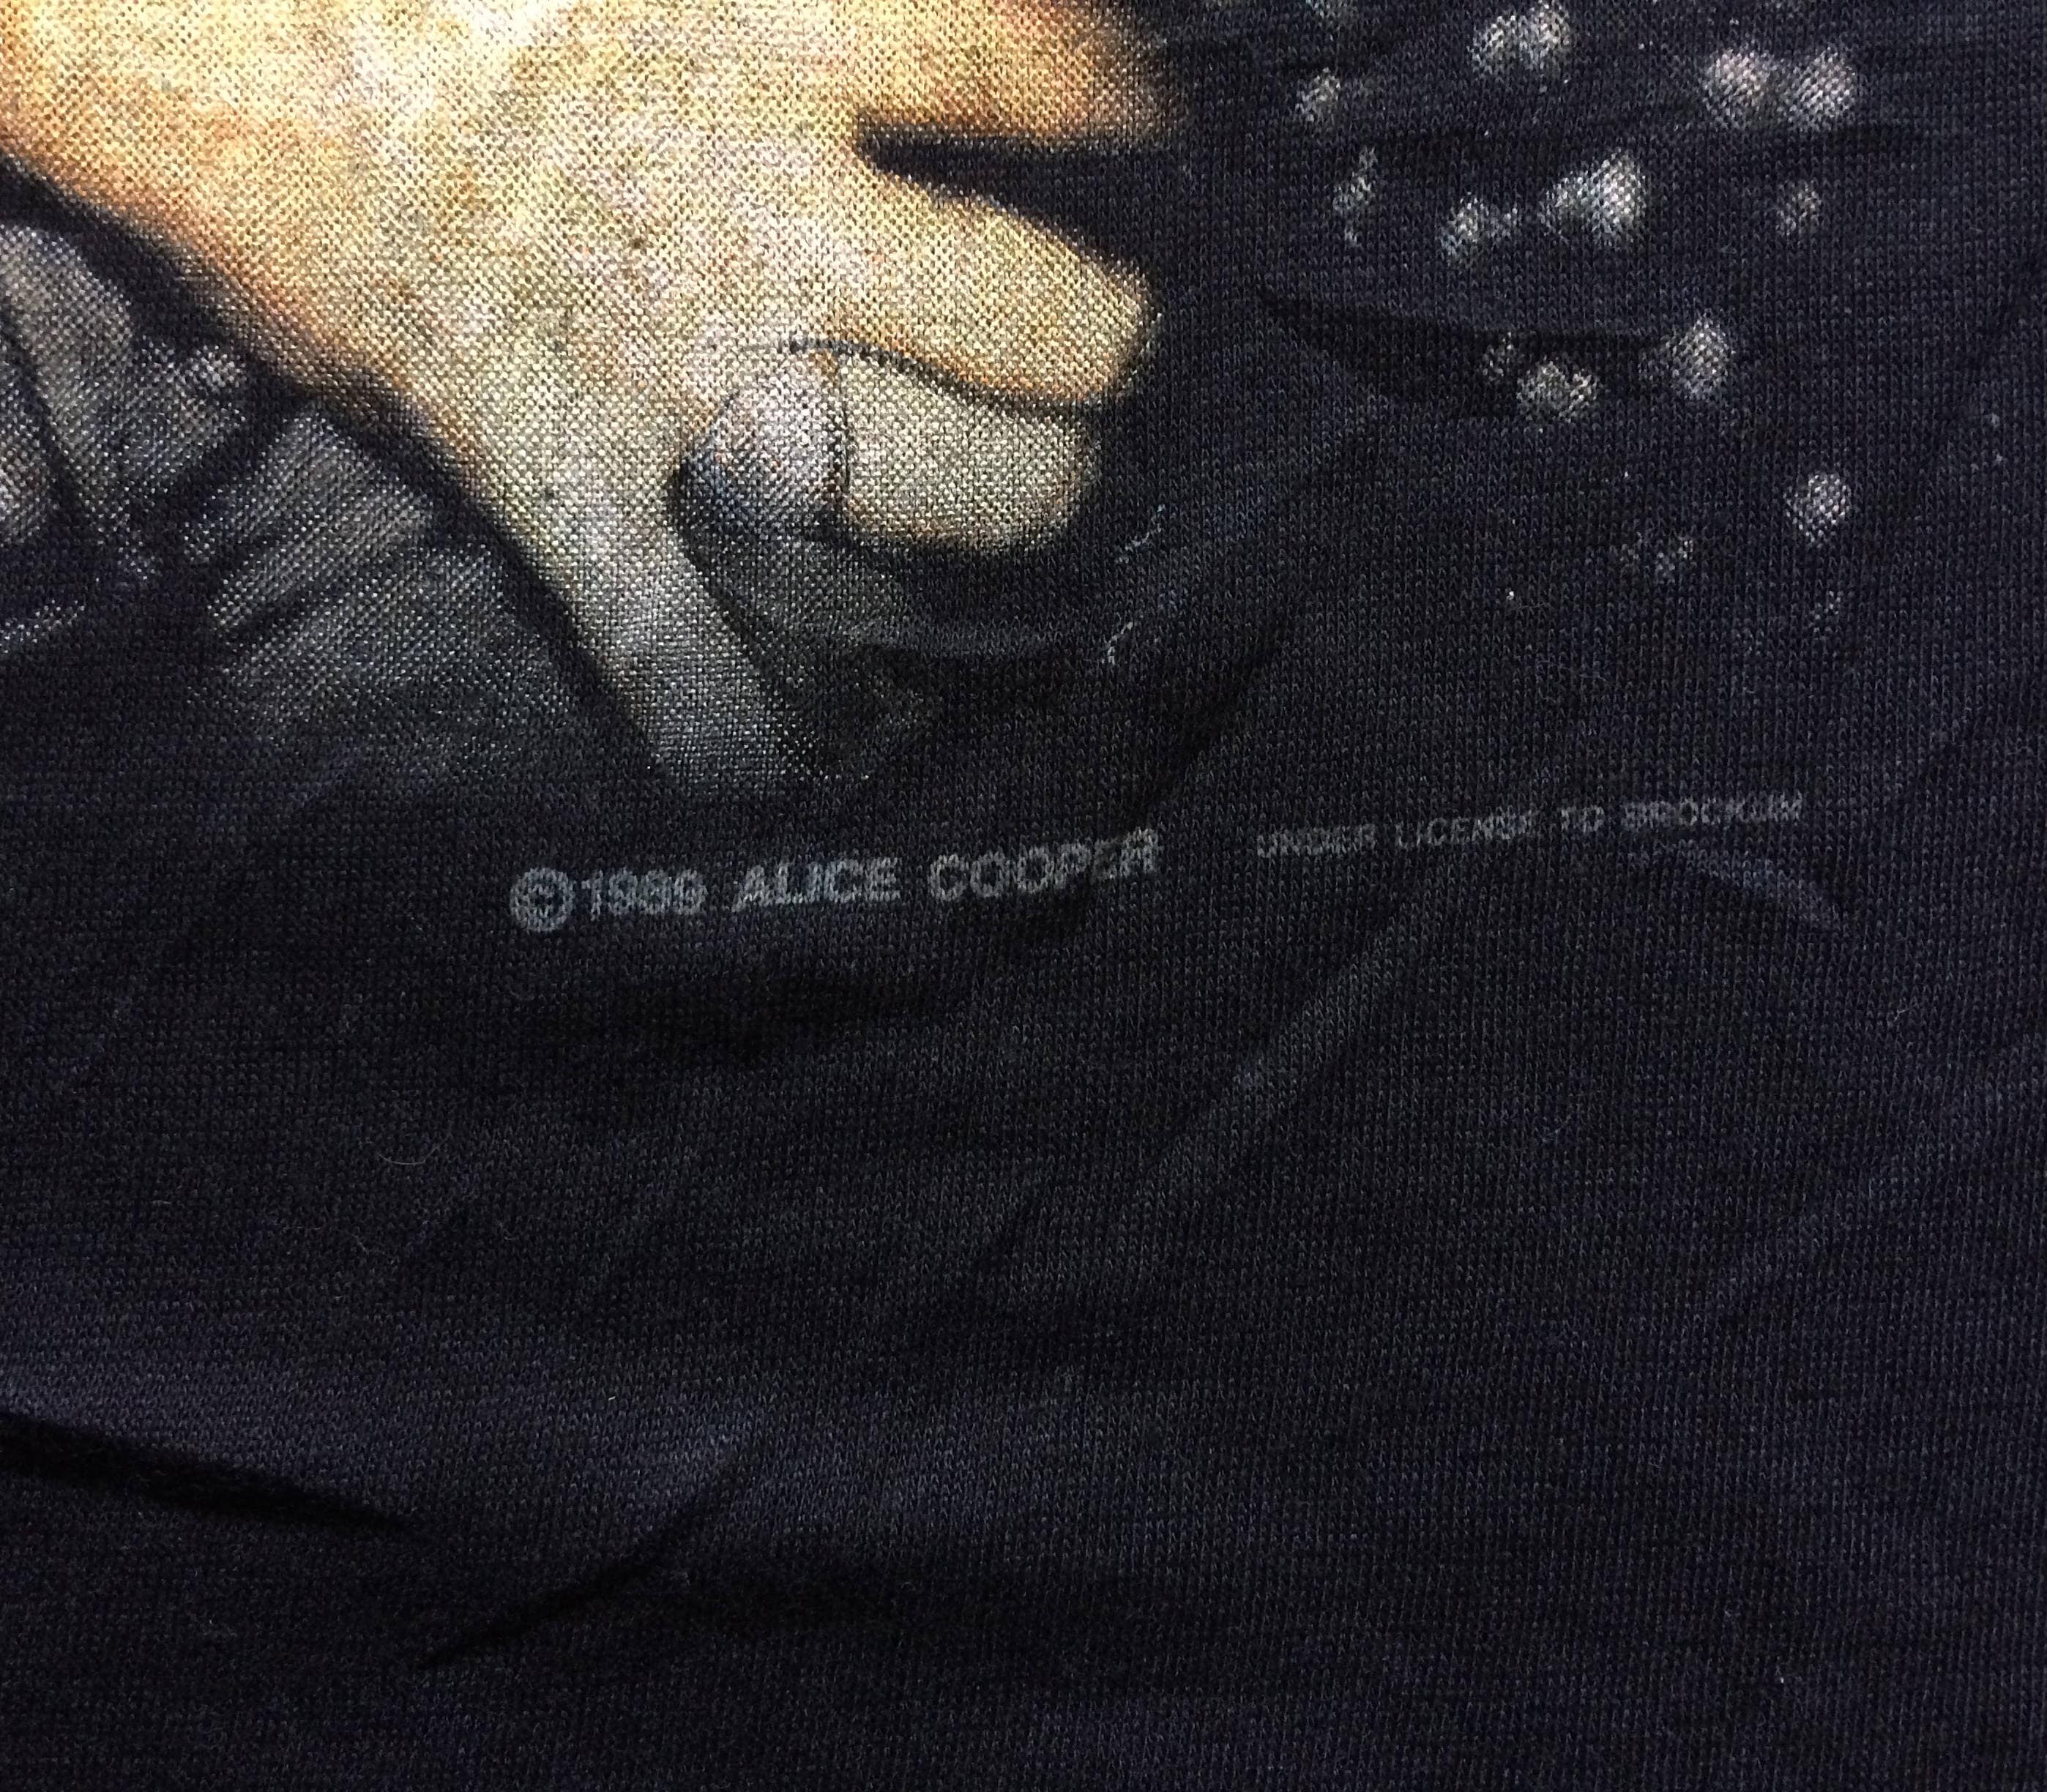 Vintage Alice Cooper Trash 80s 90s Hardcore Metal Rare Skull T - Etsy